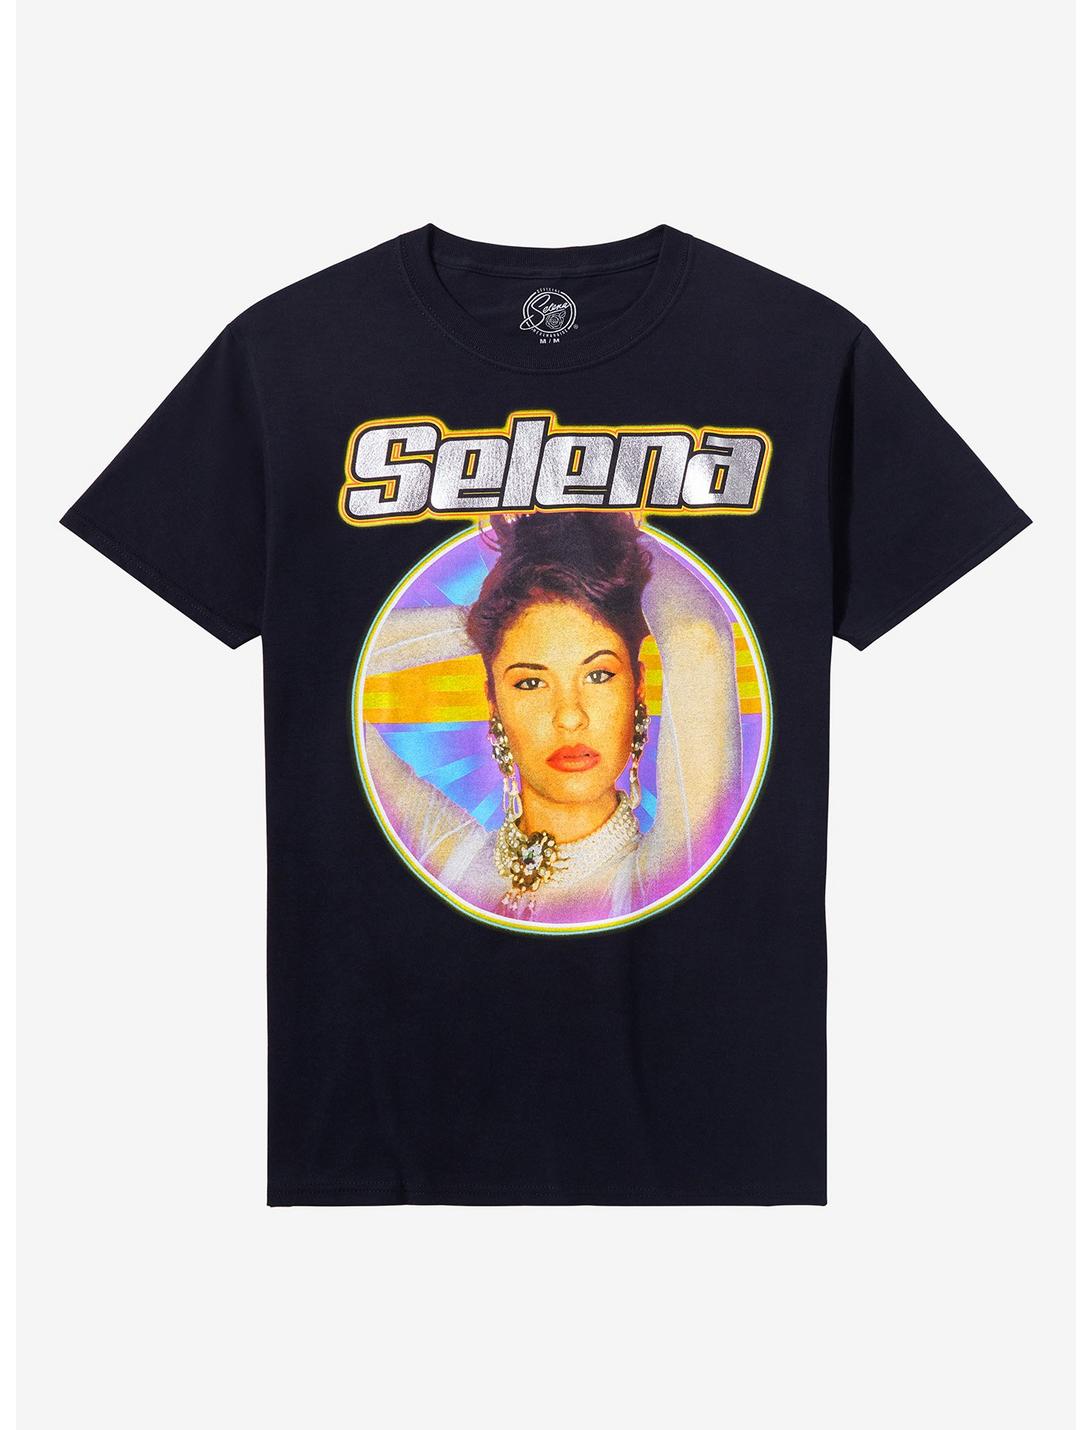 Selena Iridescent Foil Boyfriend Fit Girls T-Shirt, BLACK, hi-res